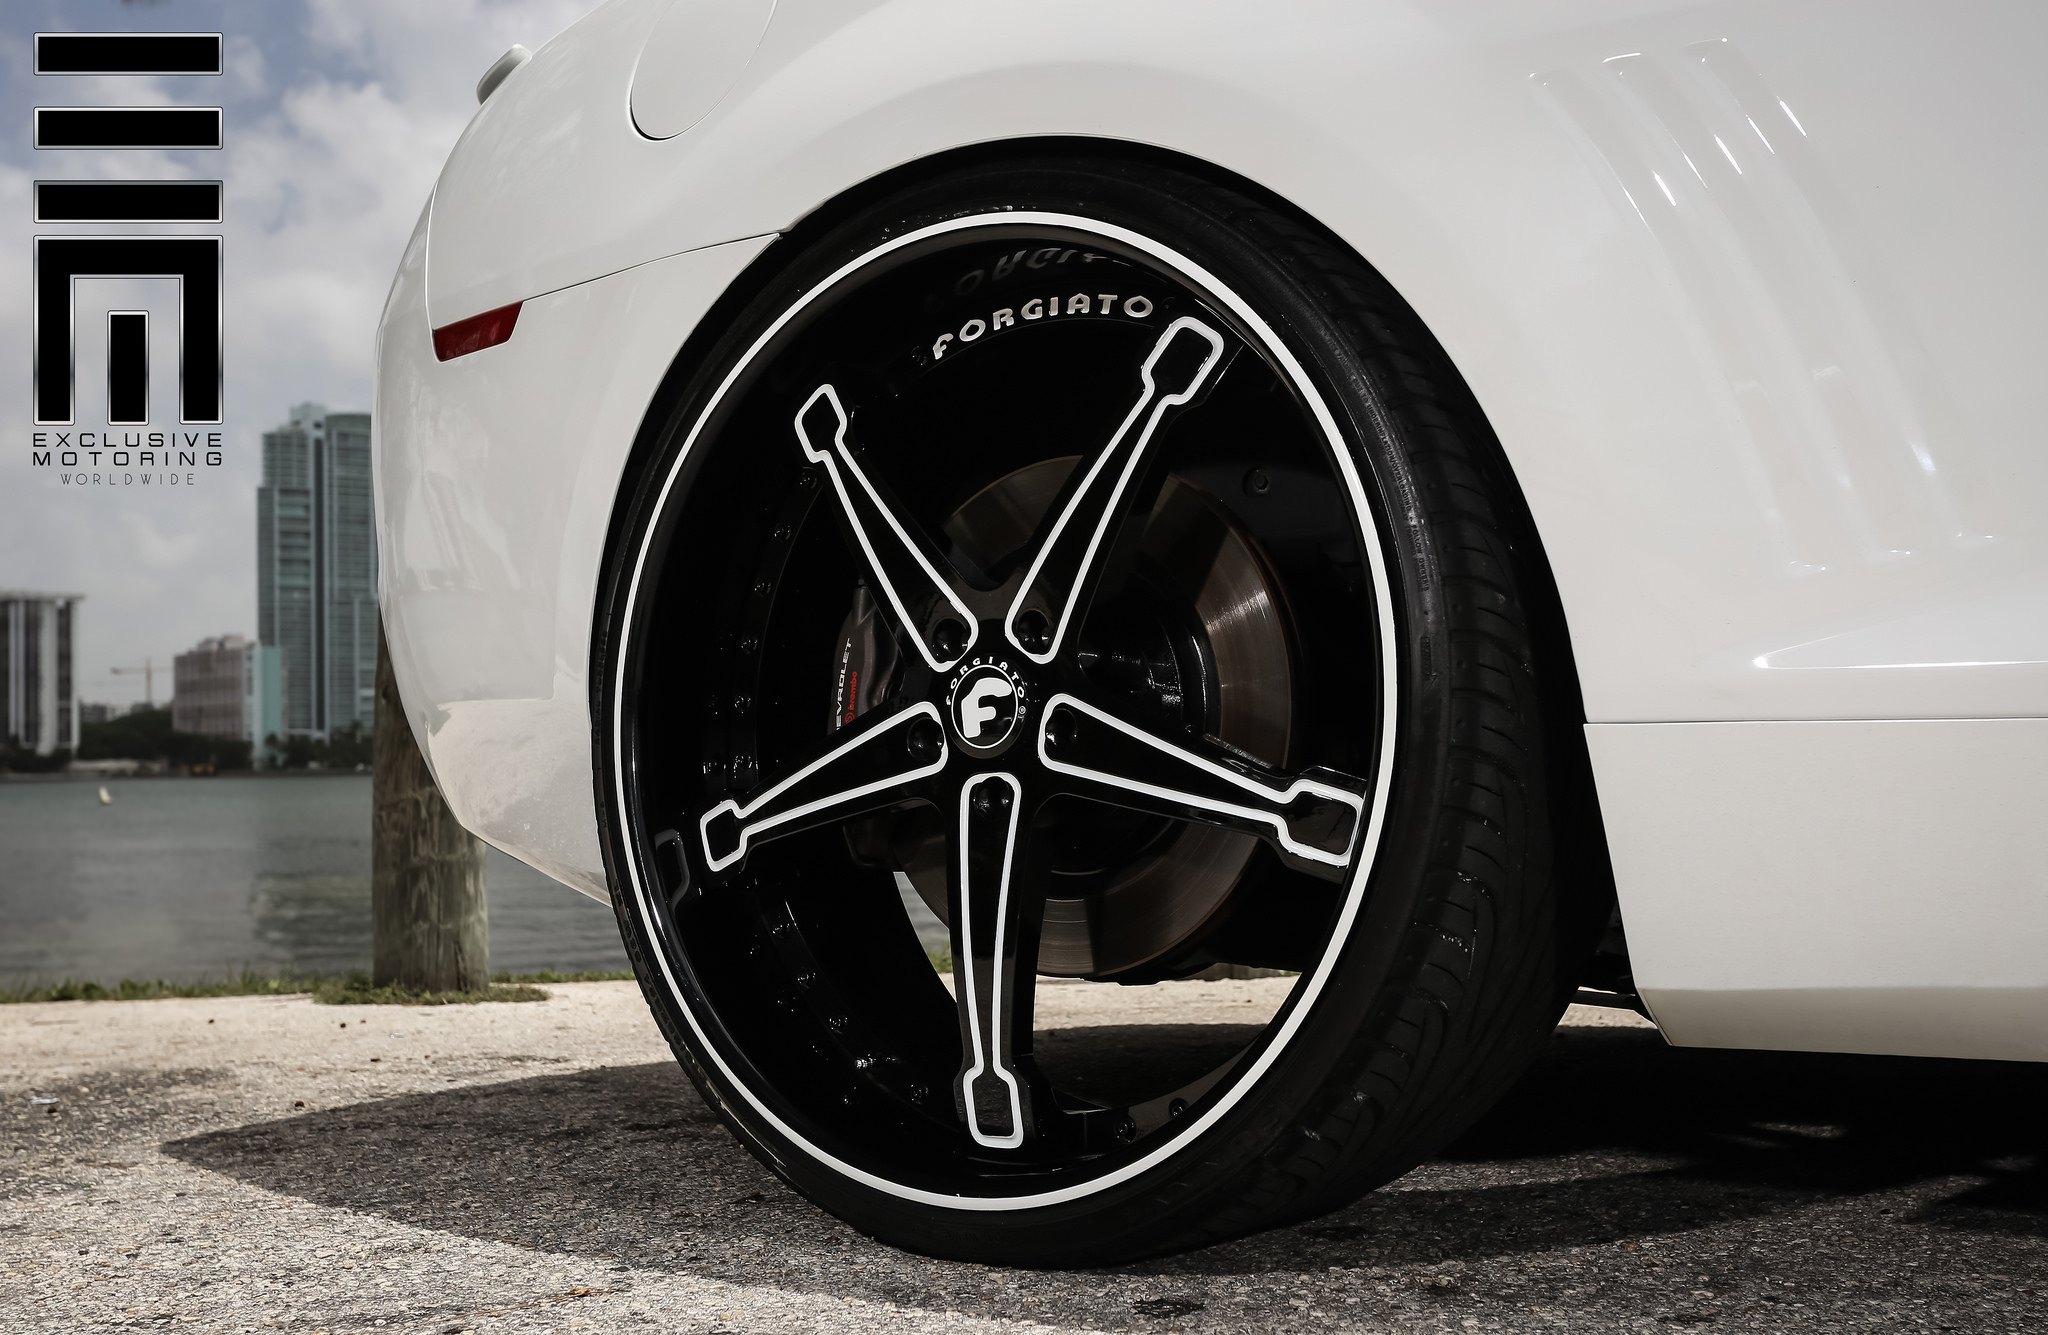 5 spoke exclusive Forgiato Wheels on Chevy Camaro Convertible - Photo by Exclusive Motoring